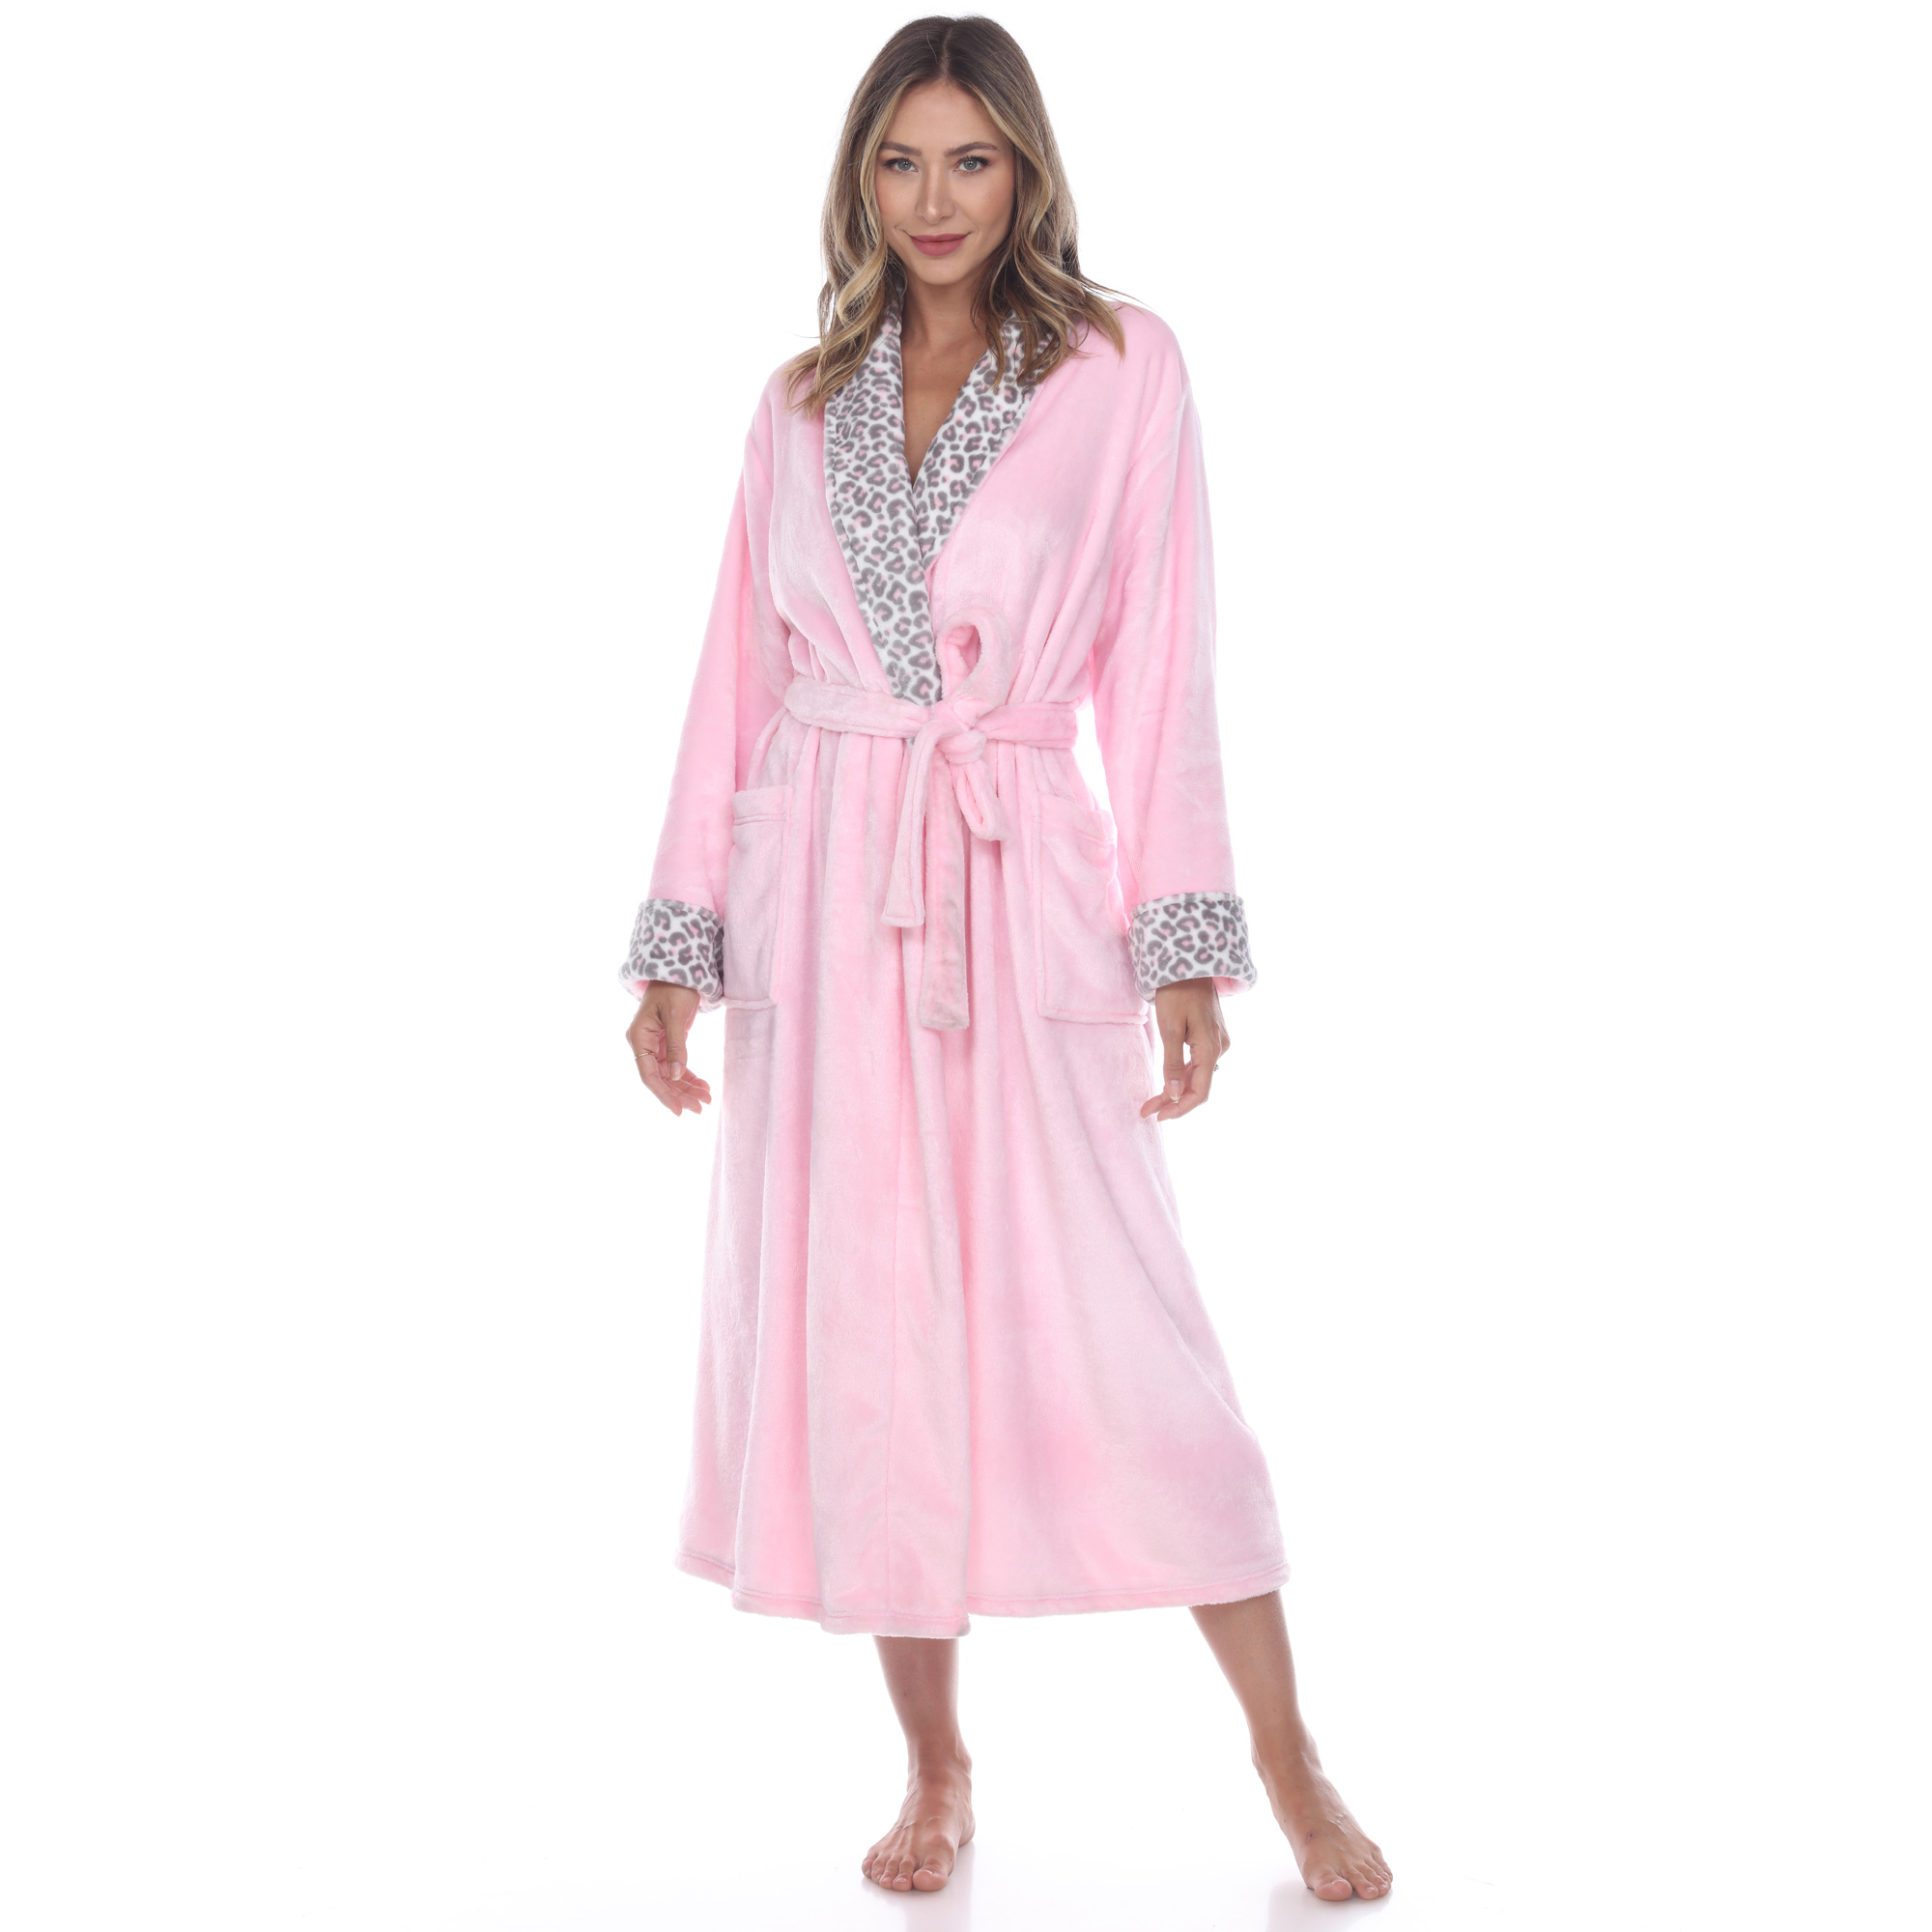 White Mark Women's Cozy Lounge Robe - Pink Leopard, L/XL